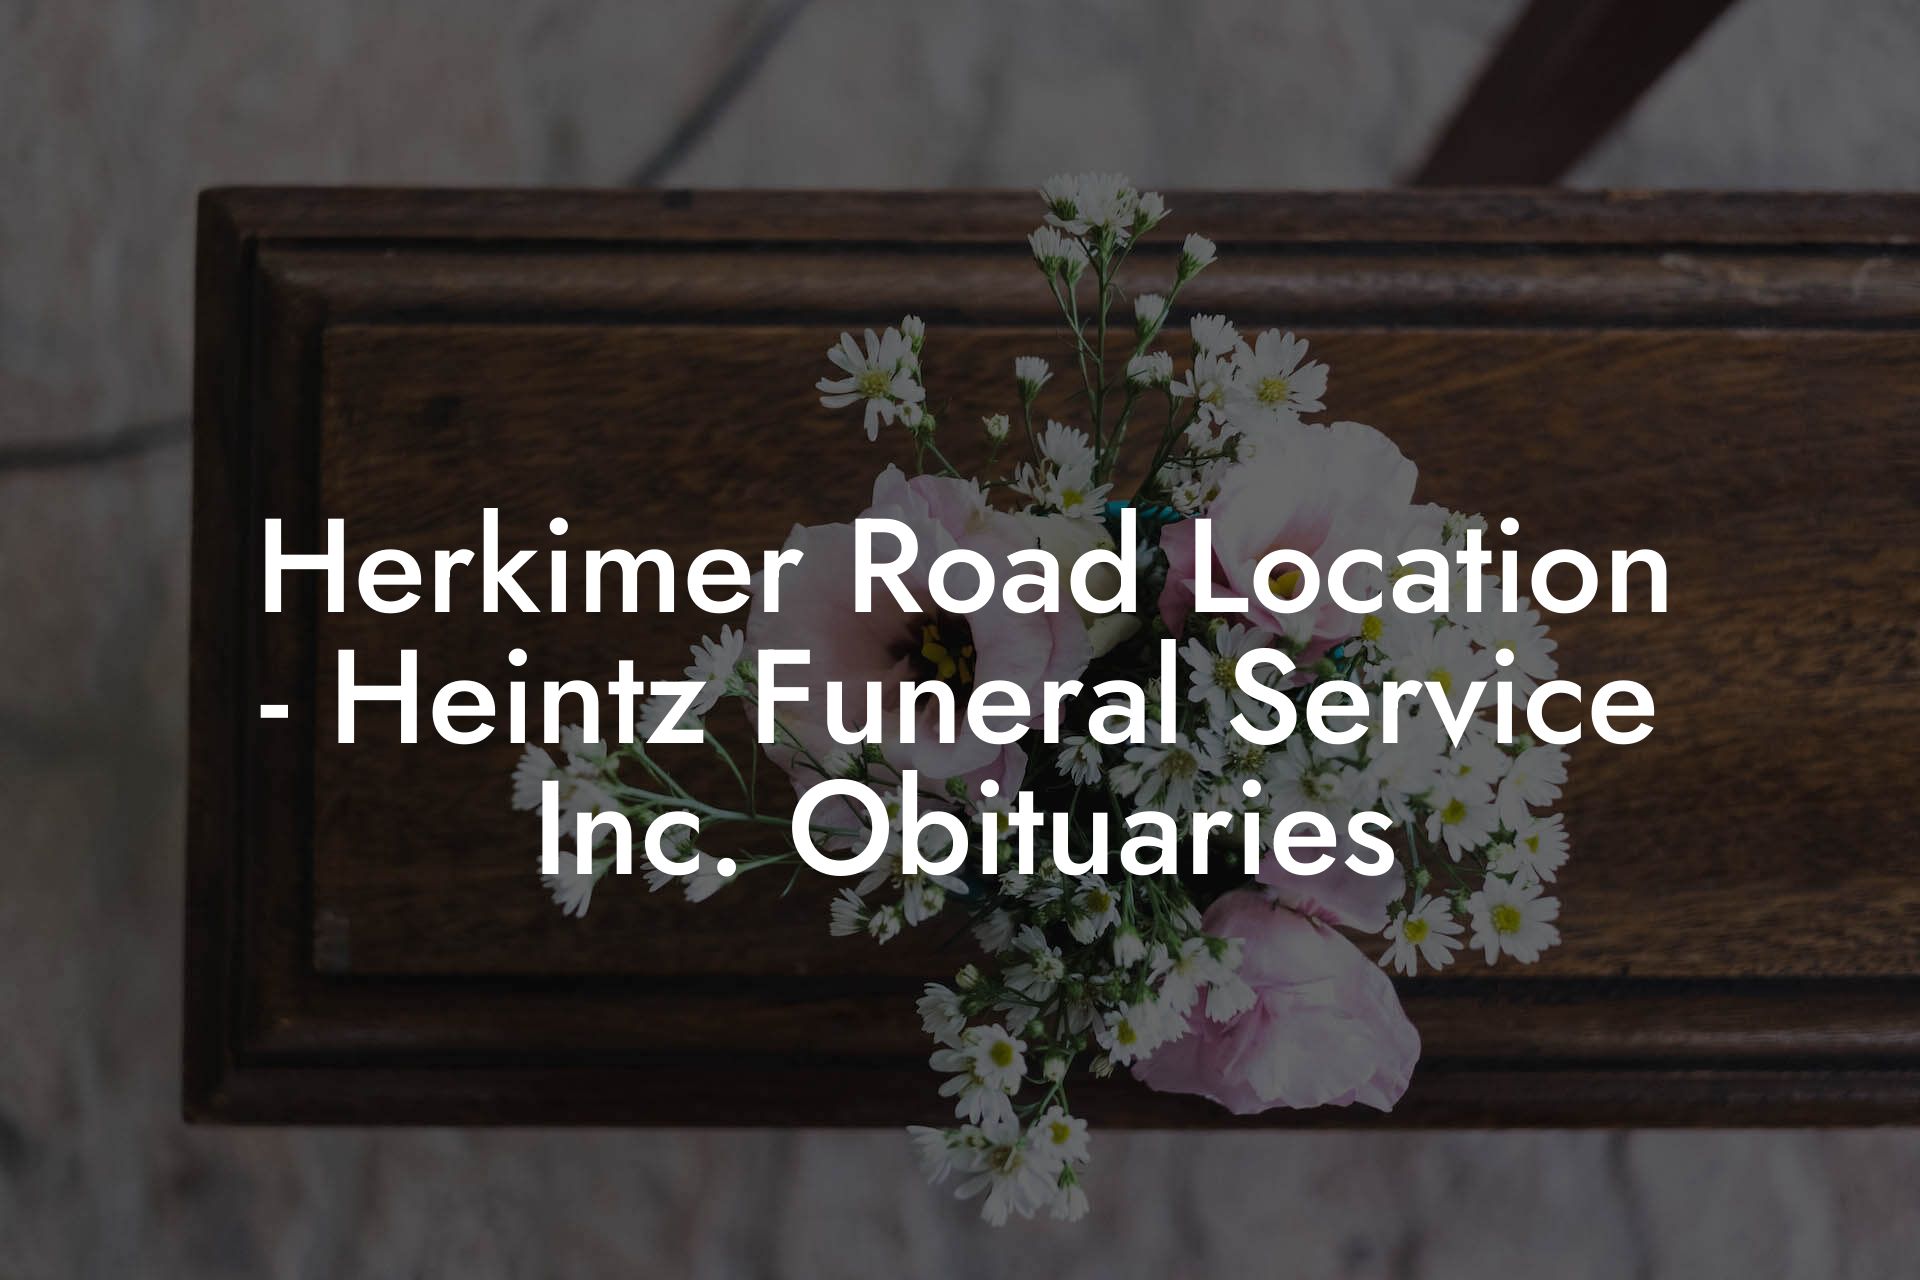 Herkimer Road Location - Heintz Funeral Service Inc. Obituaries